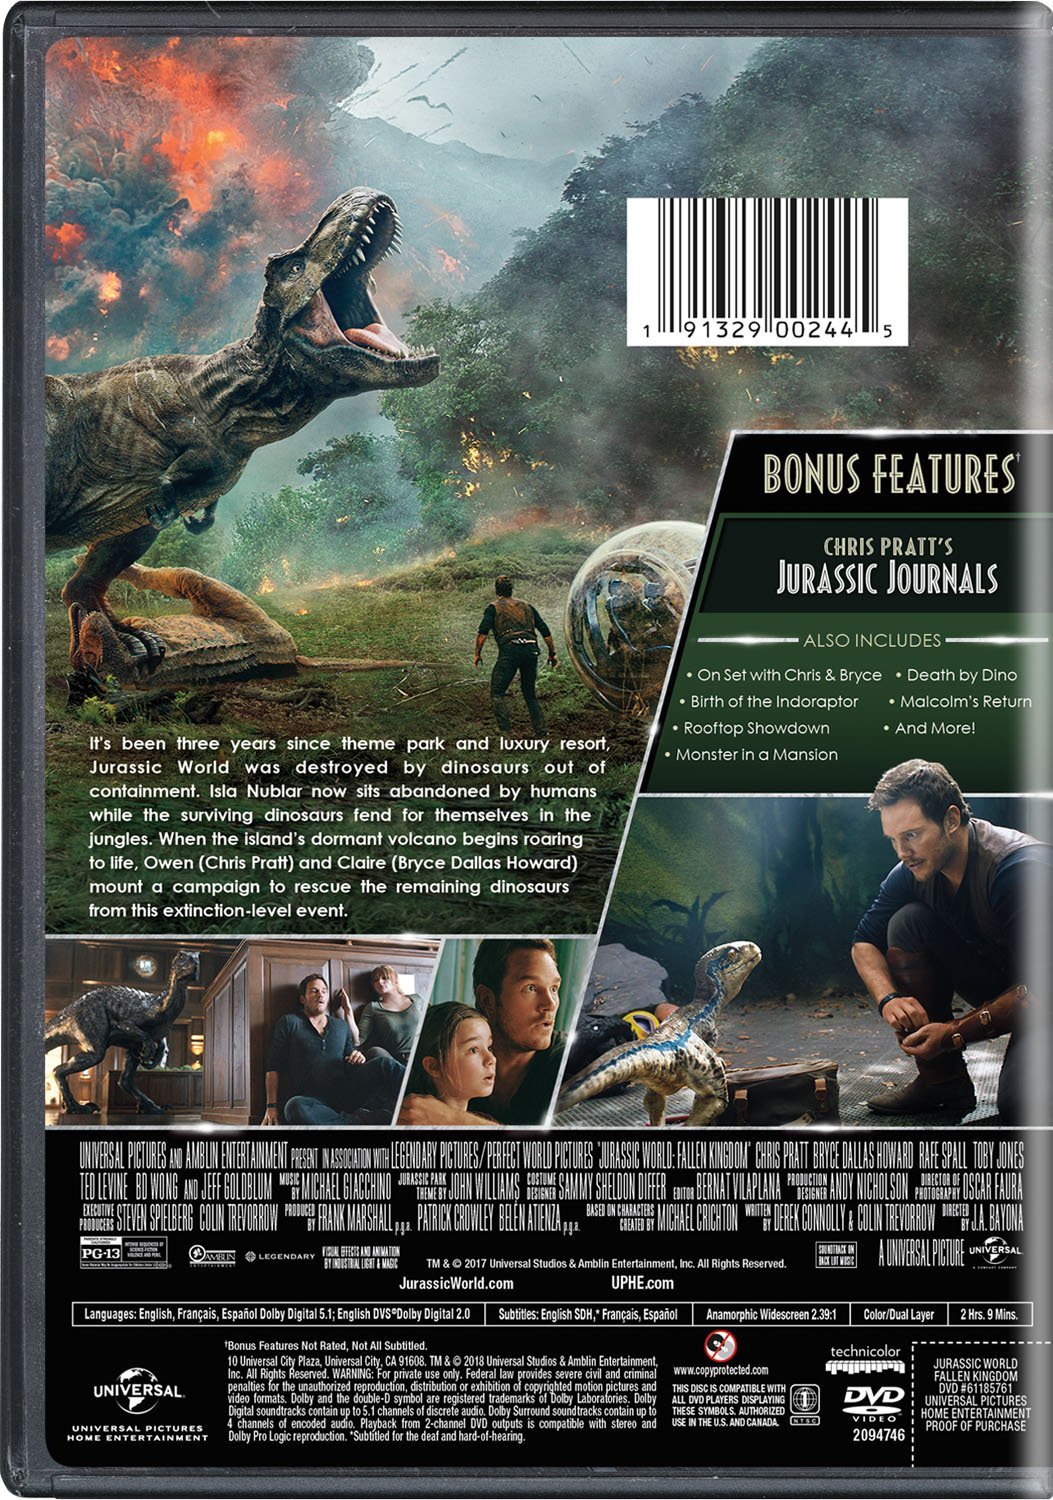 Jurassic World: Fallen Kingdom (DVD), Universal Studios, Action & Adventure - image 2 of 7